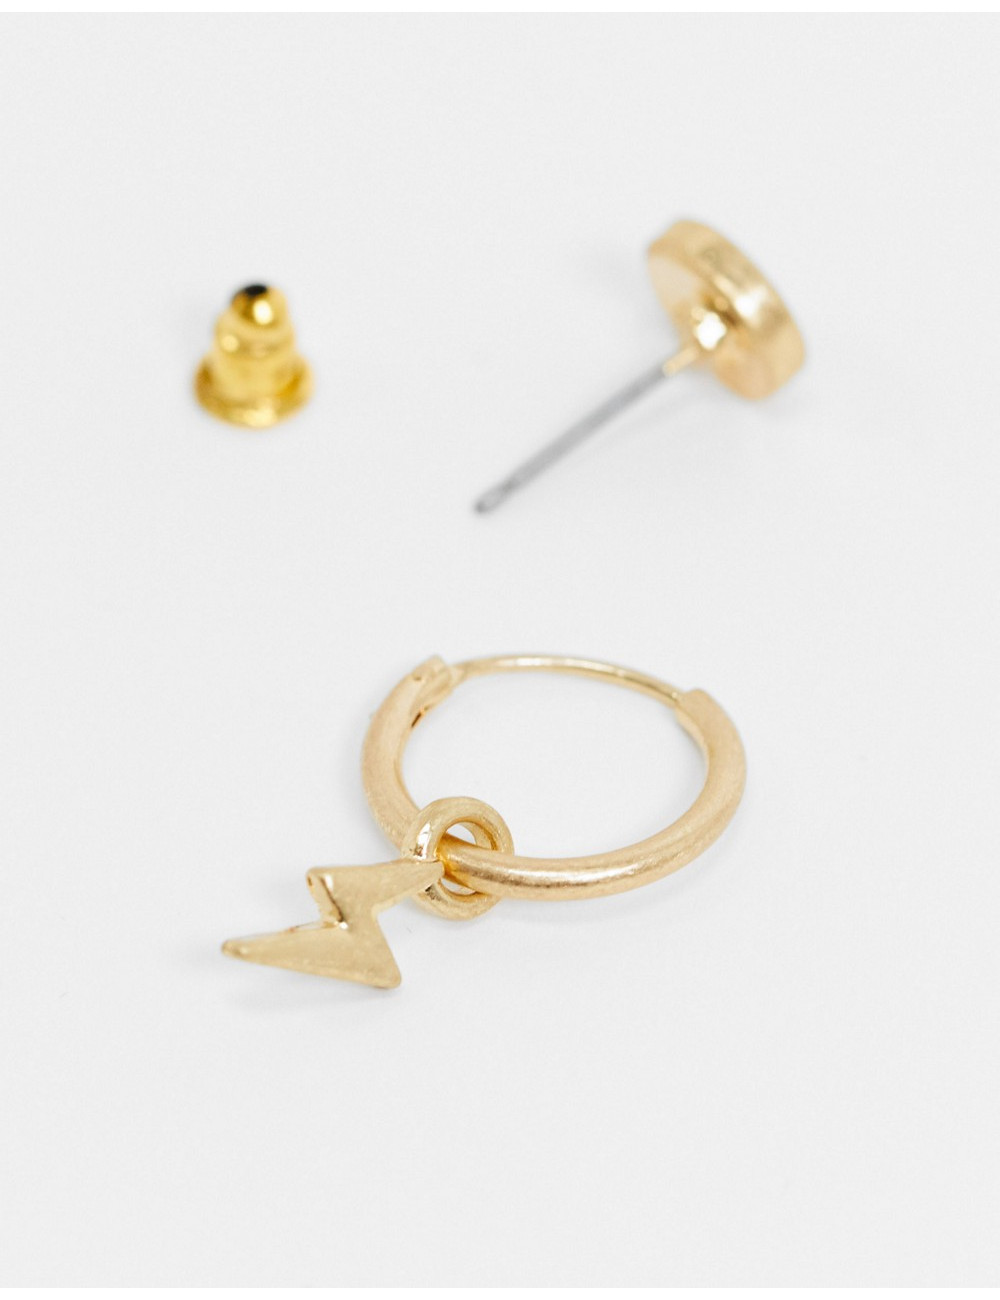 Icon Brand earrings in gold...